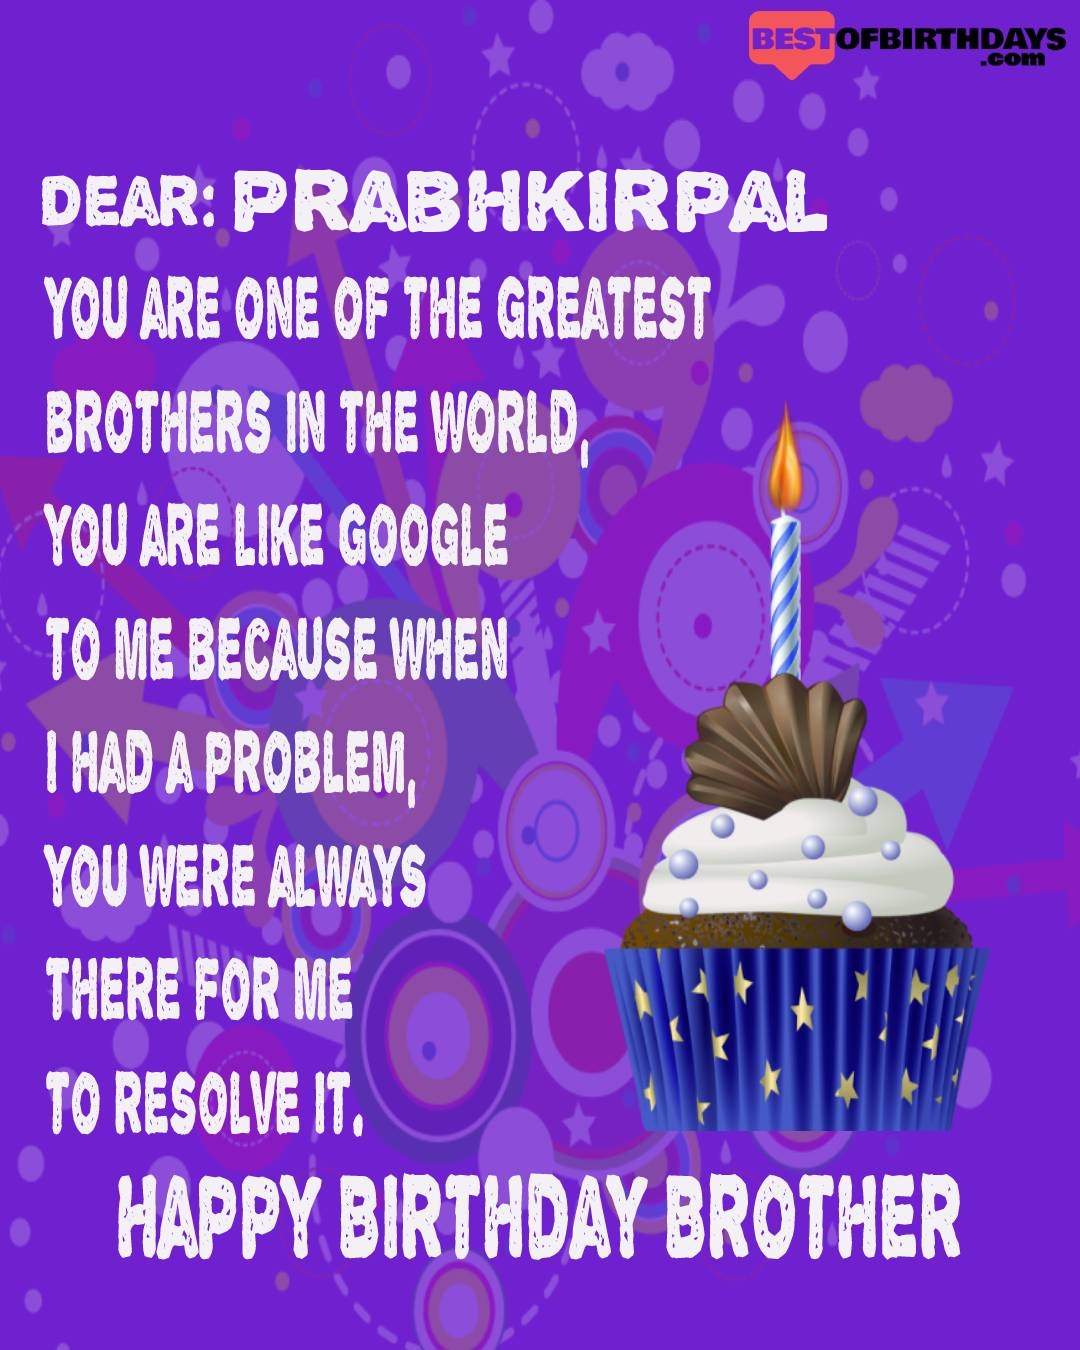 Happy birthday prabhkirpal bhai brother bro